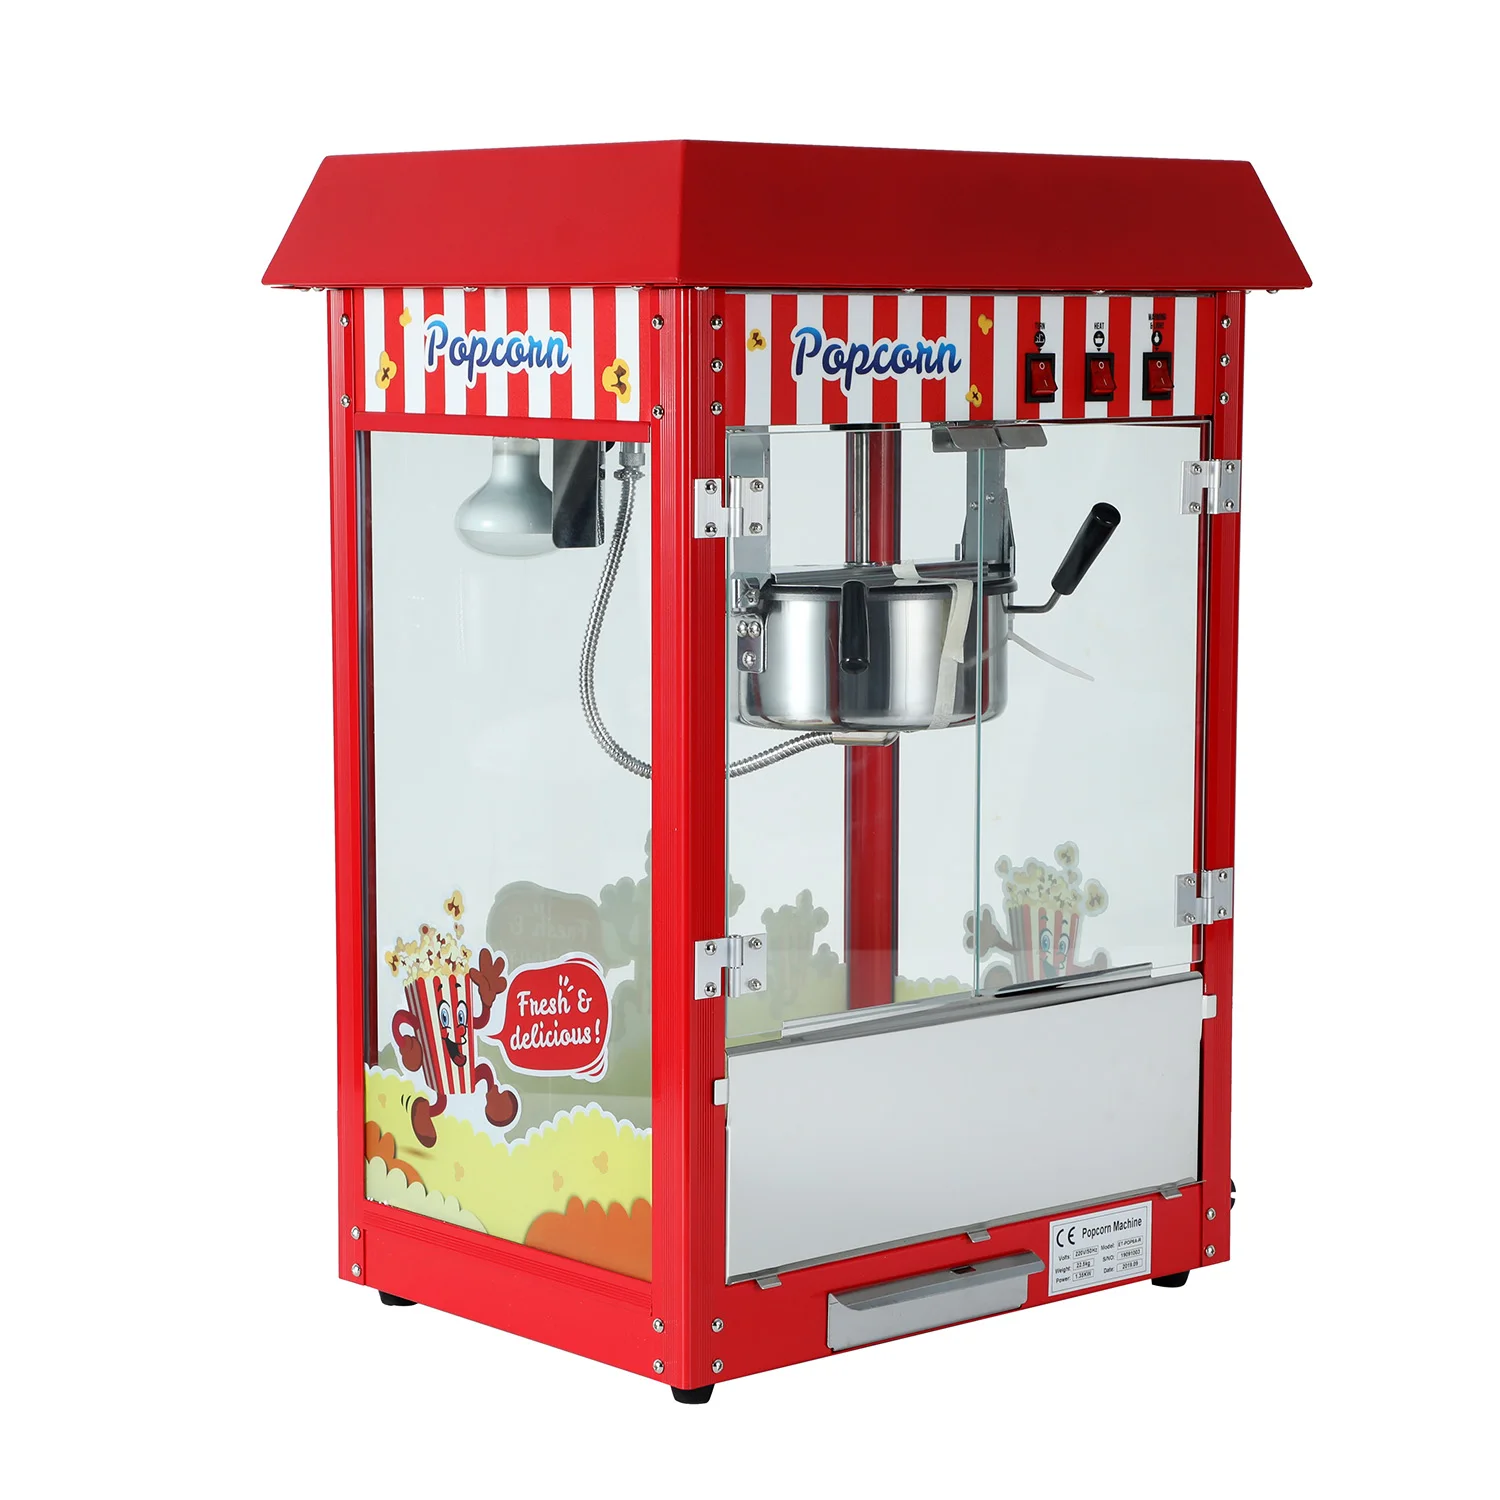 
Popcorn machine with cart 